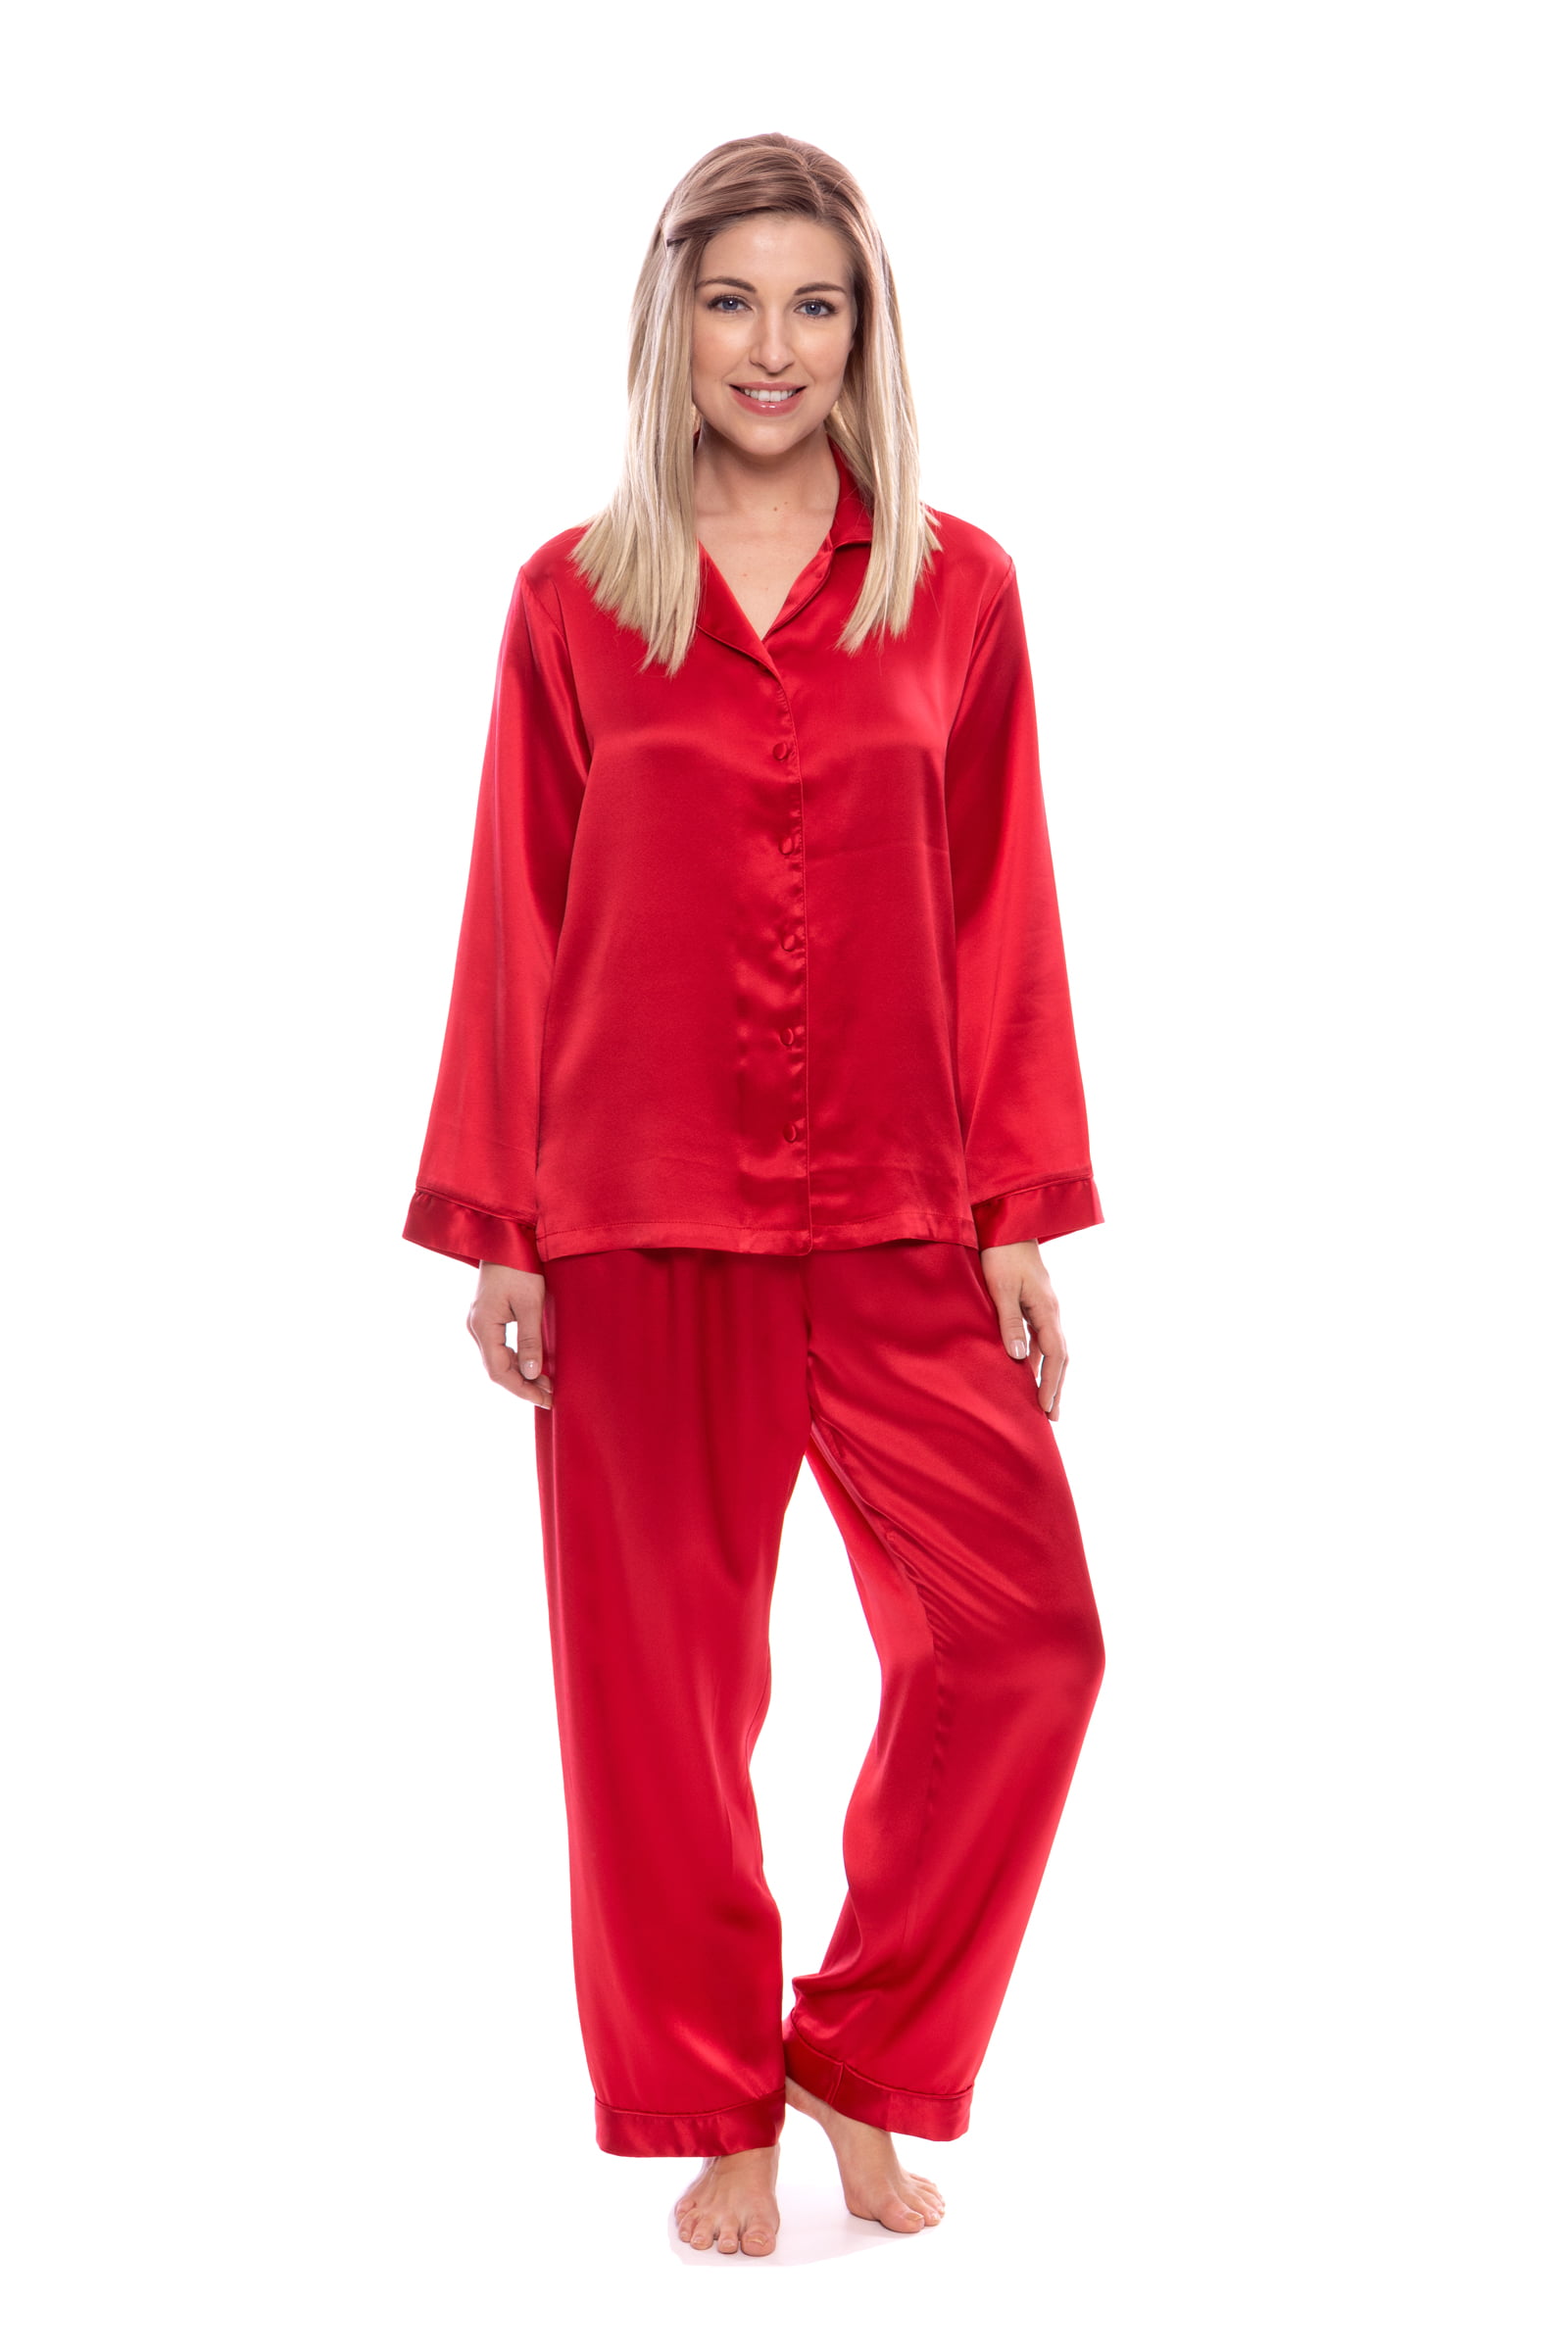 Women's 100% Silk Pajama Set - Luxury Sleepwear Pjs by TexereSilk